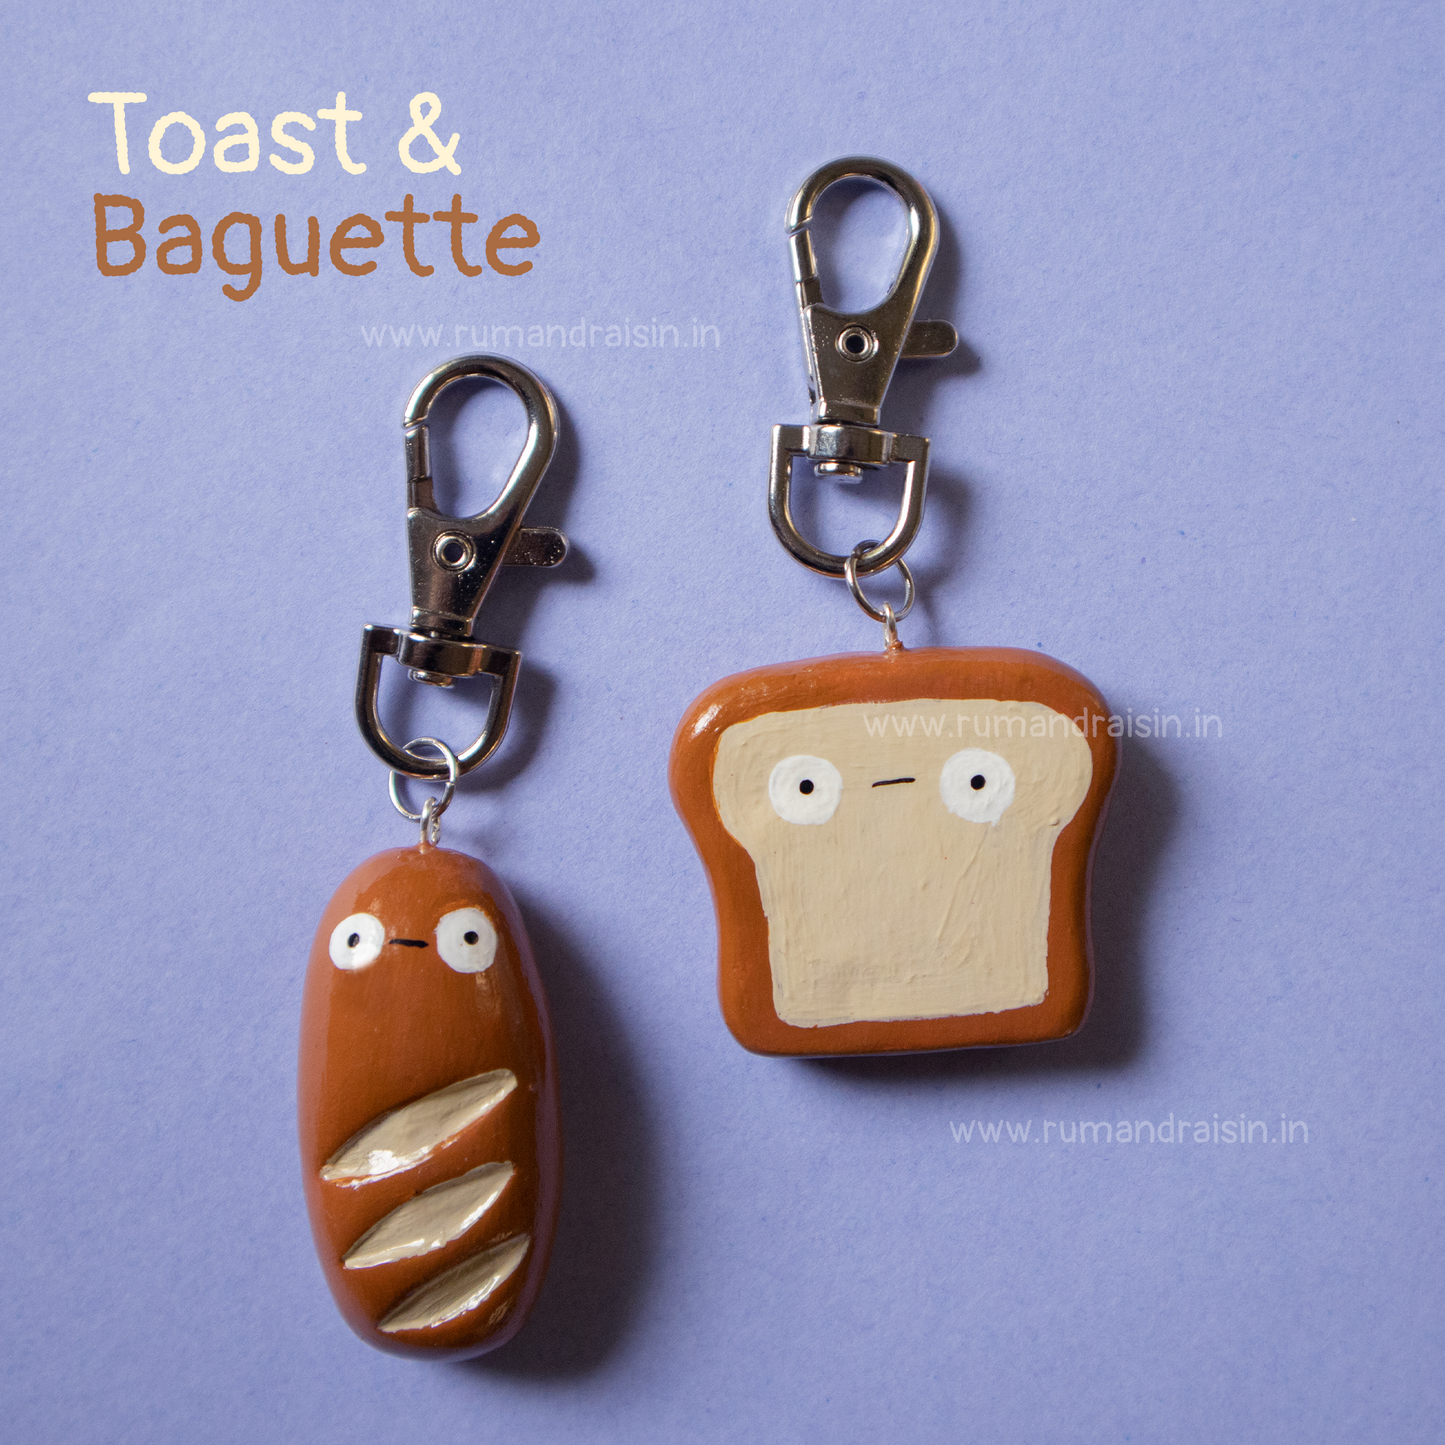 Toast & Baguette: Keychain Set